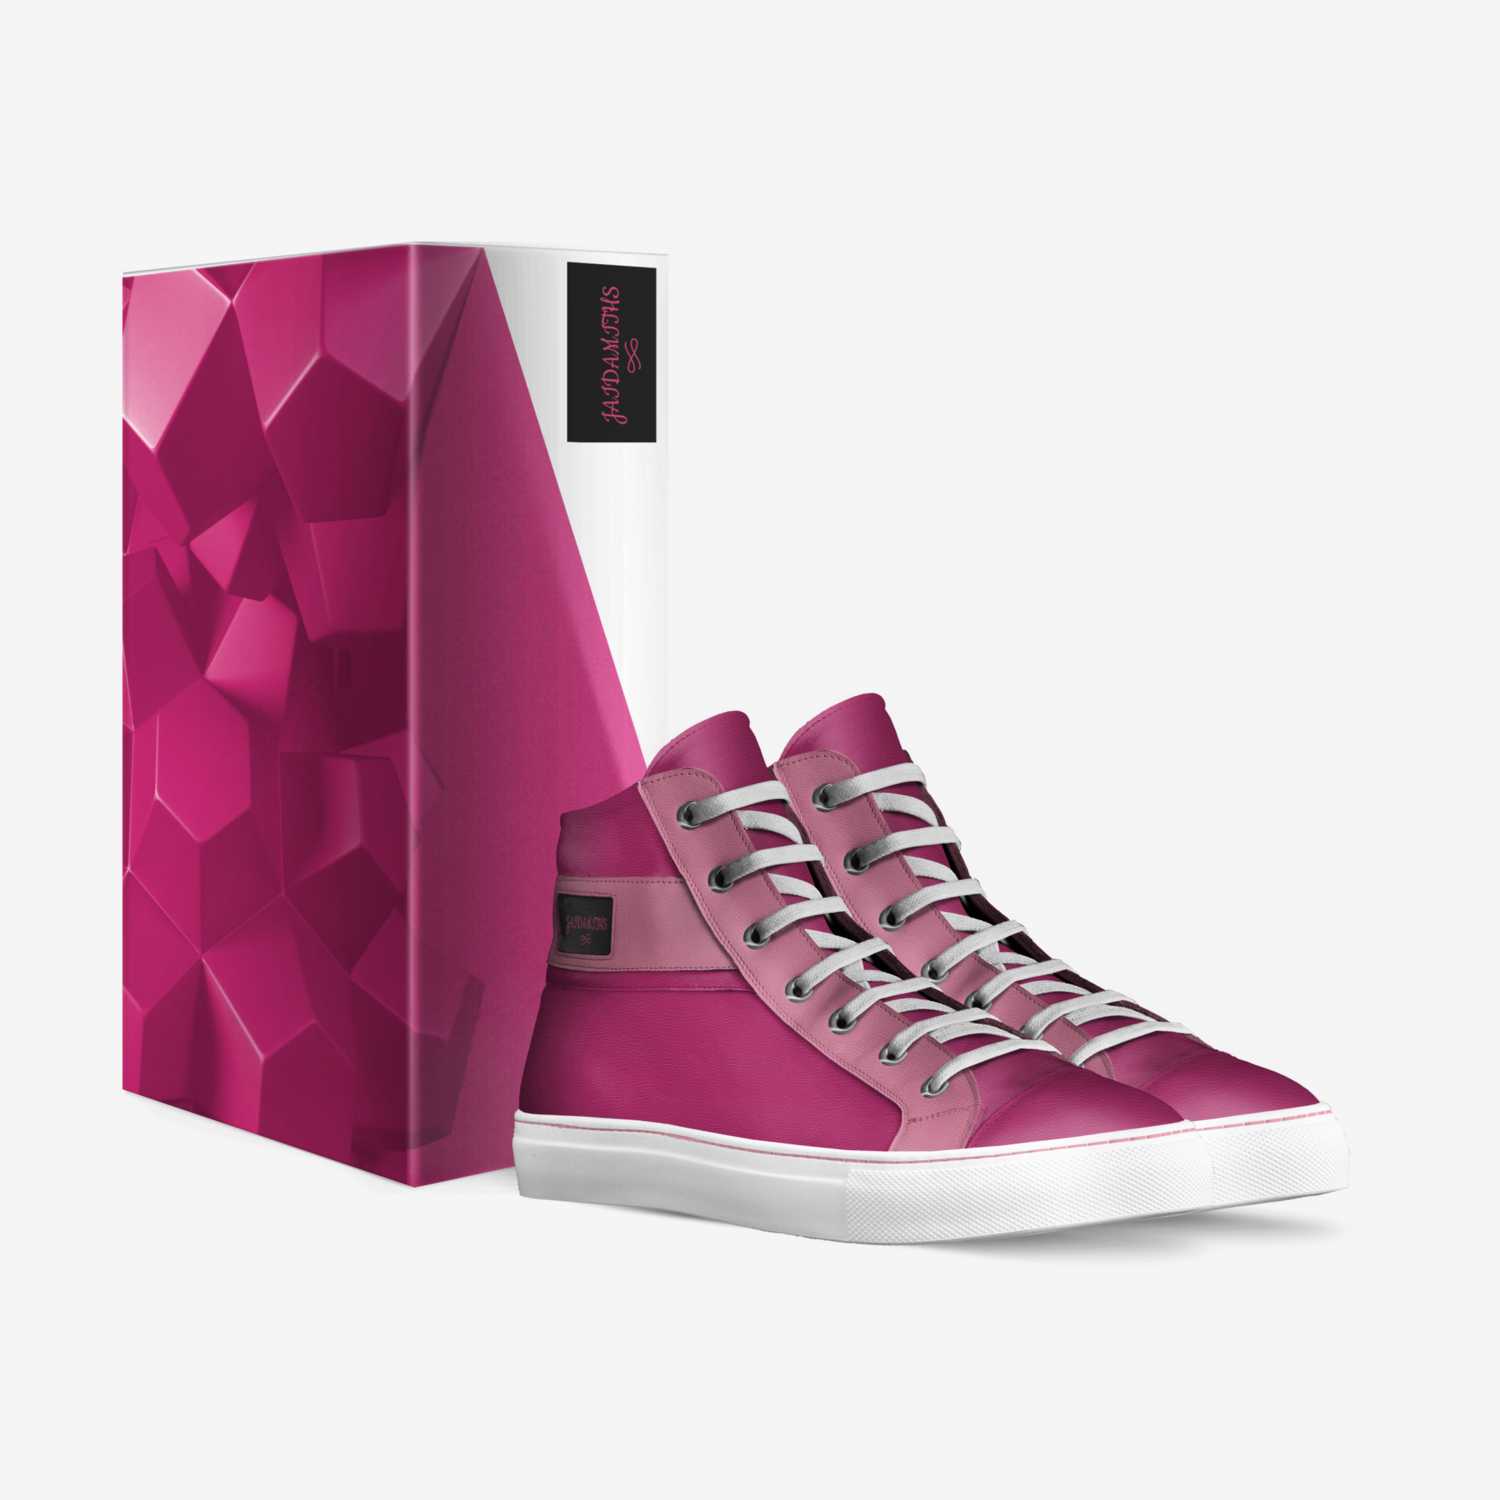 JAIDAMITHS custom made in Italy shoes by Jaida Tosha | Box view